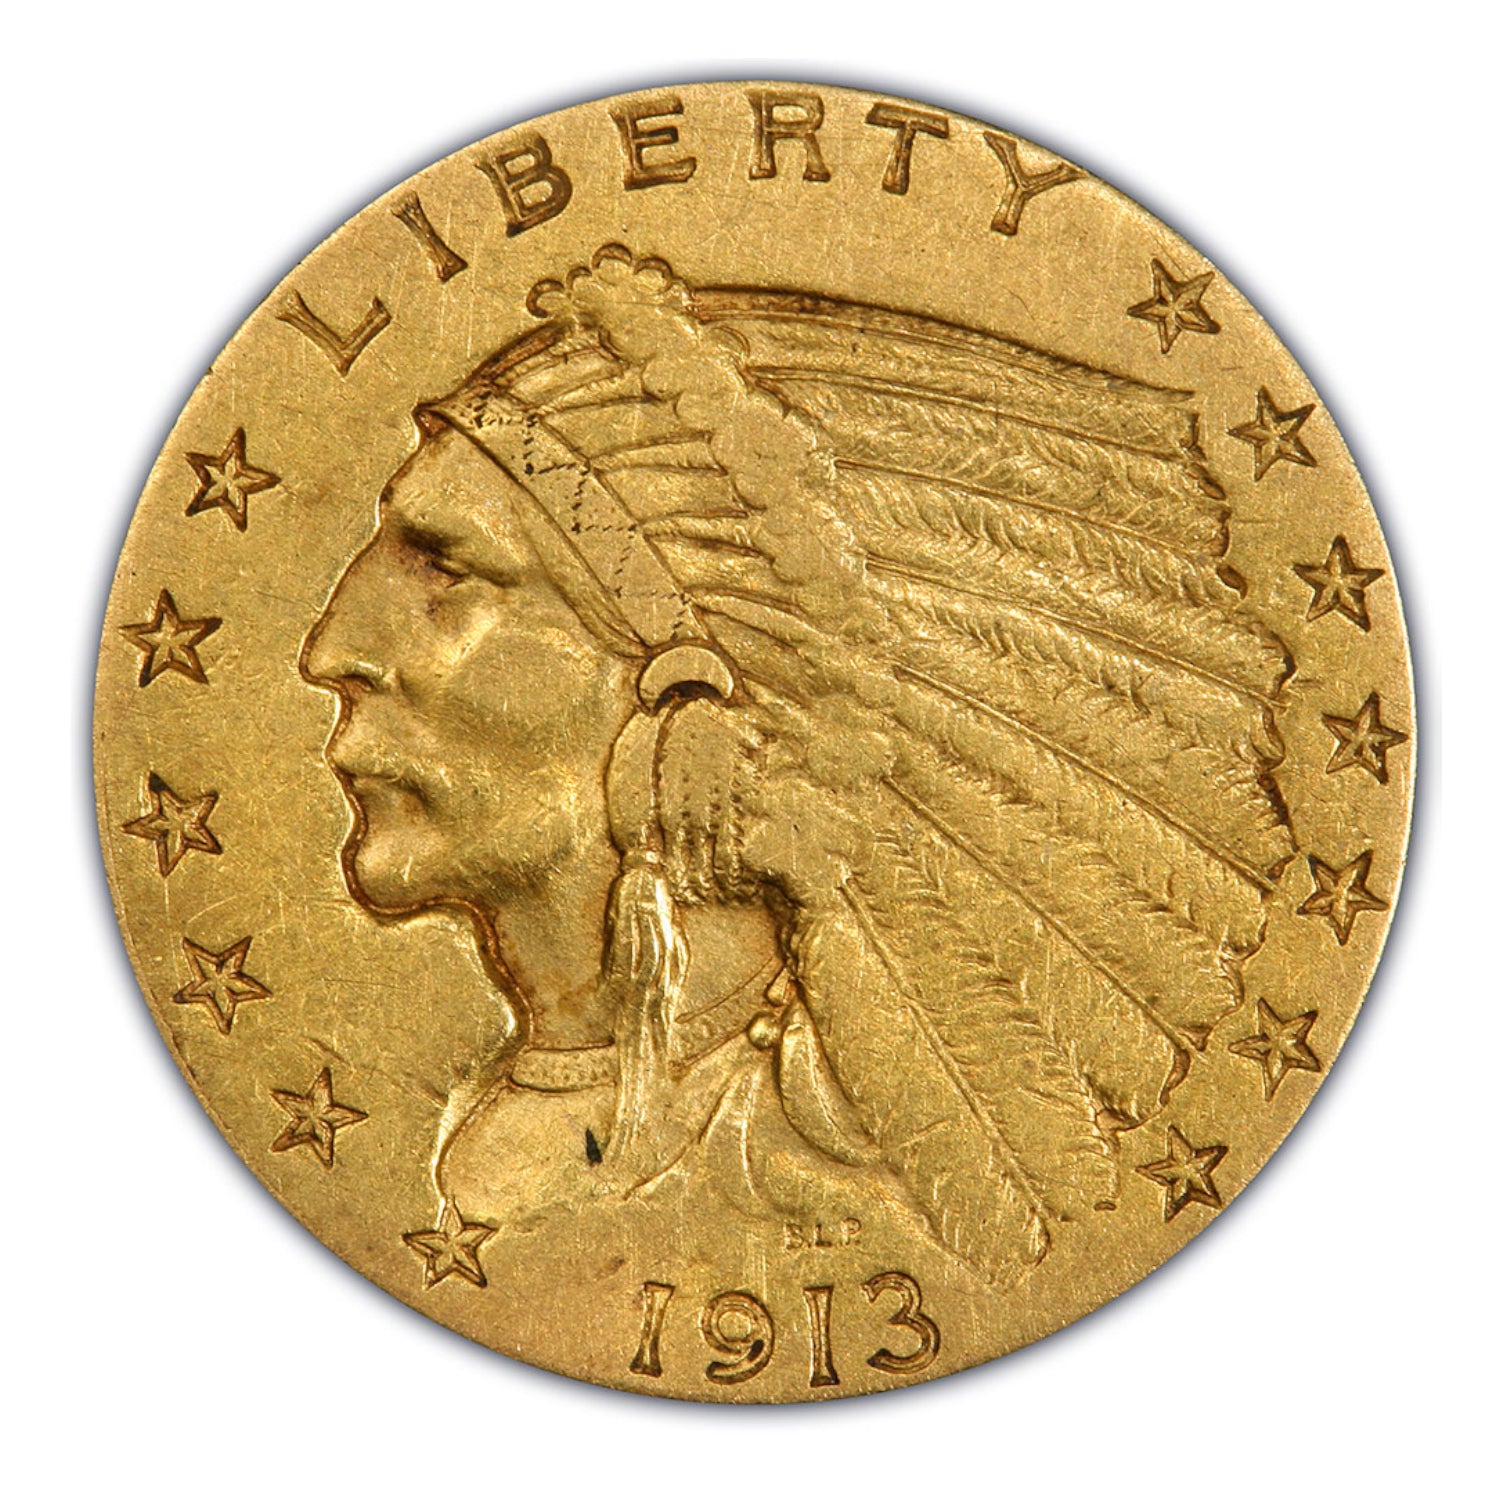 1908-1929 $2.50 Indian Head Gold Piece & Wood Box